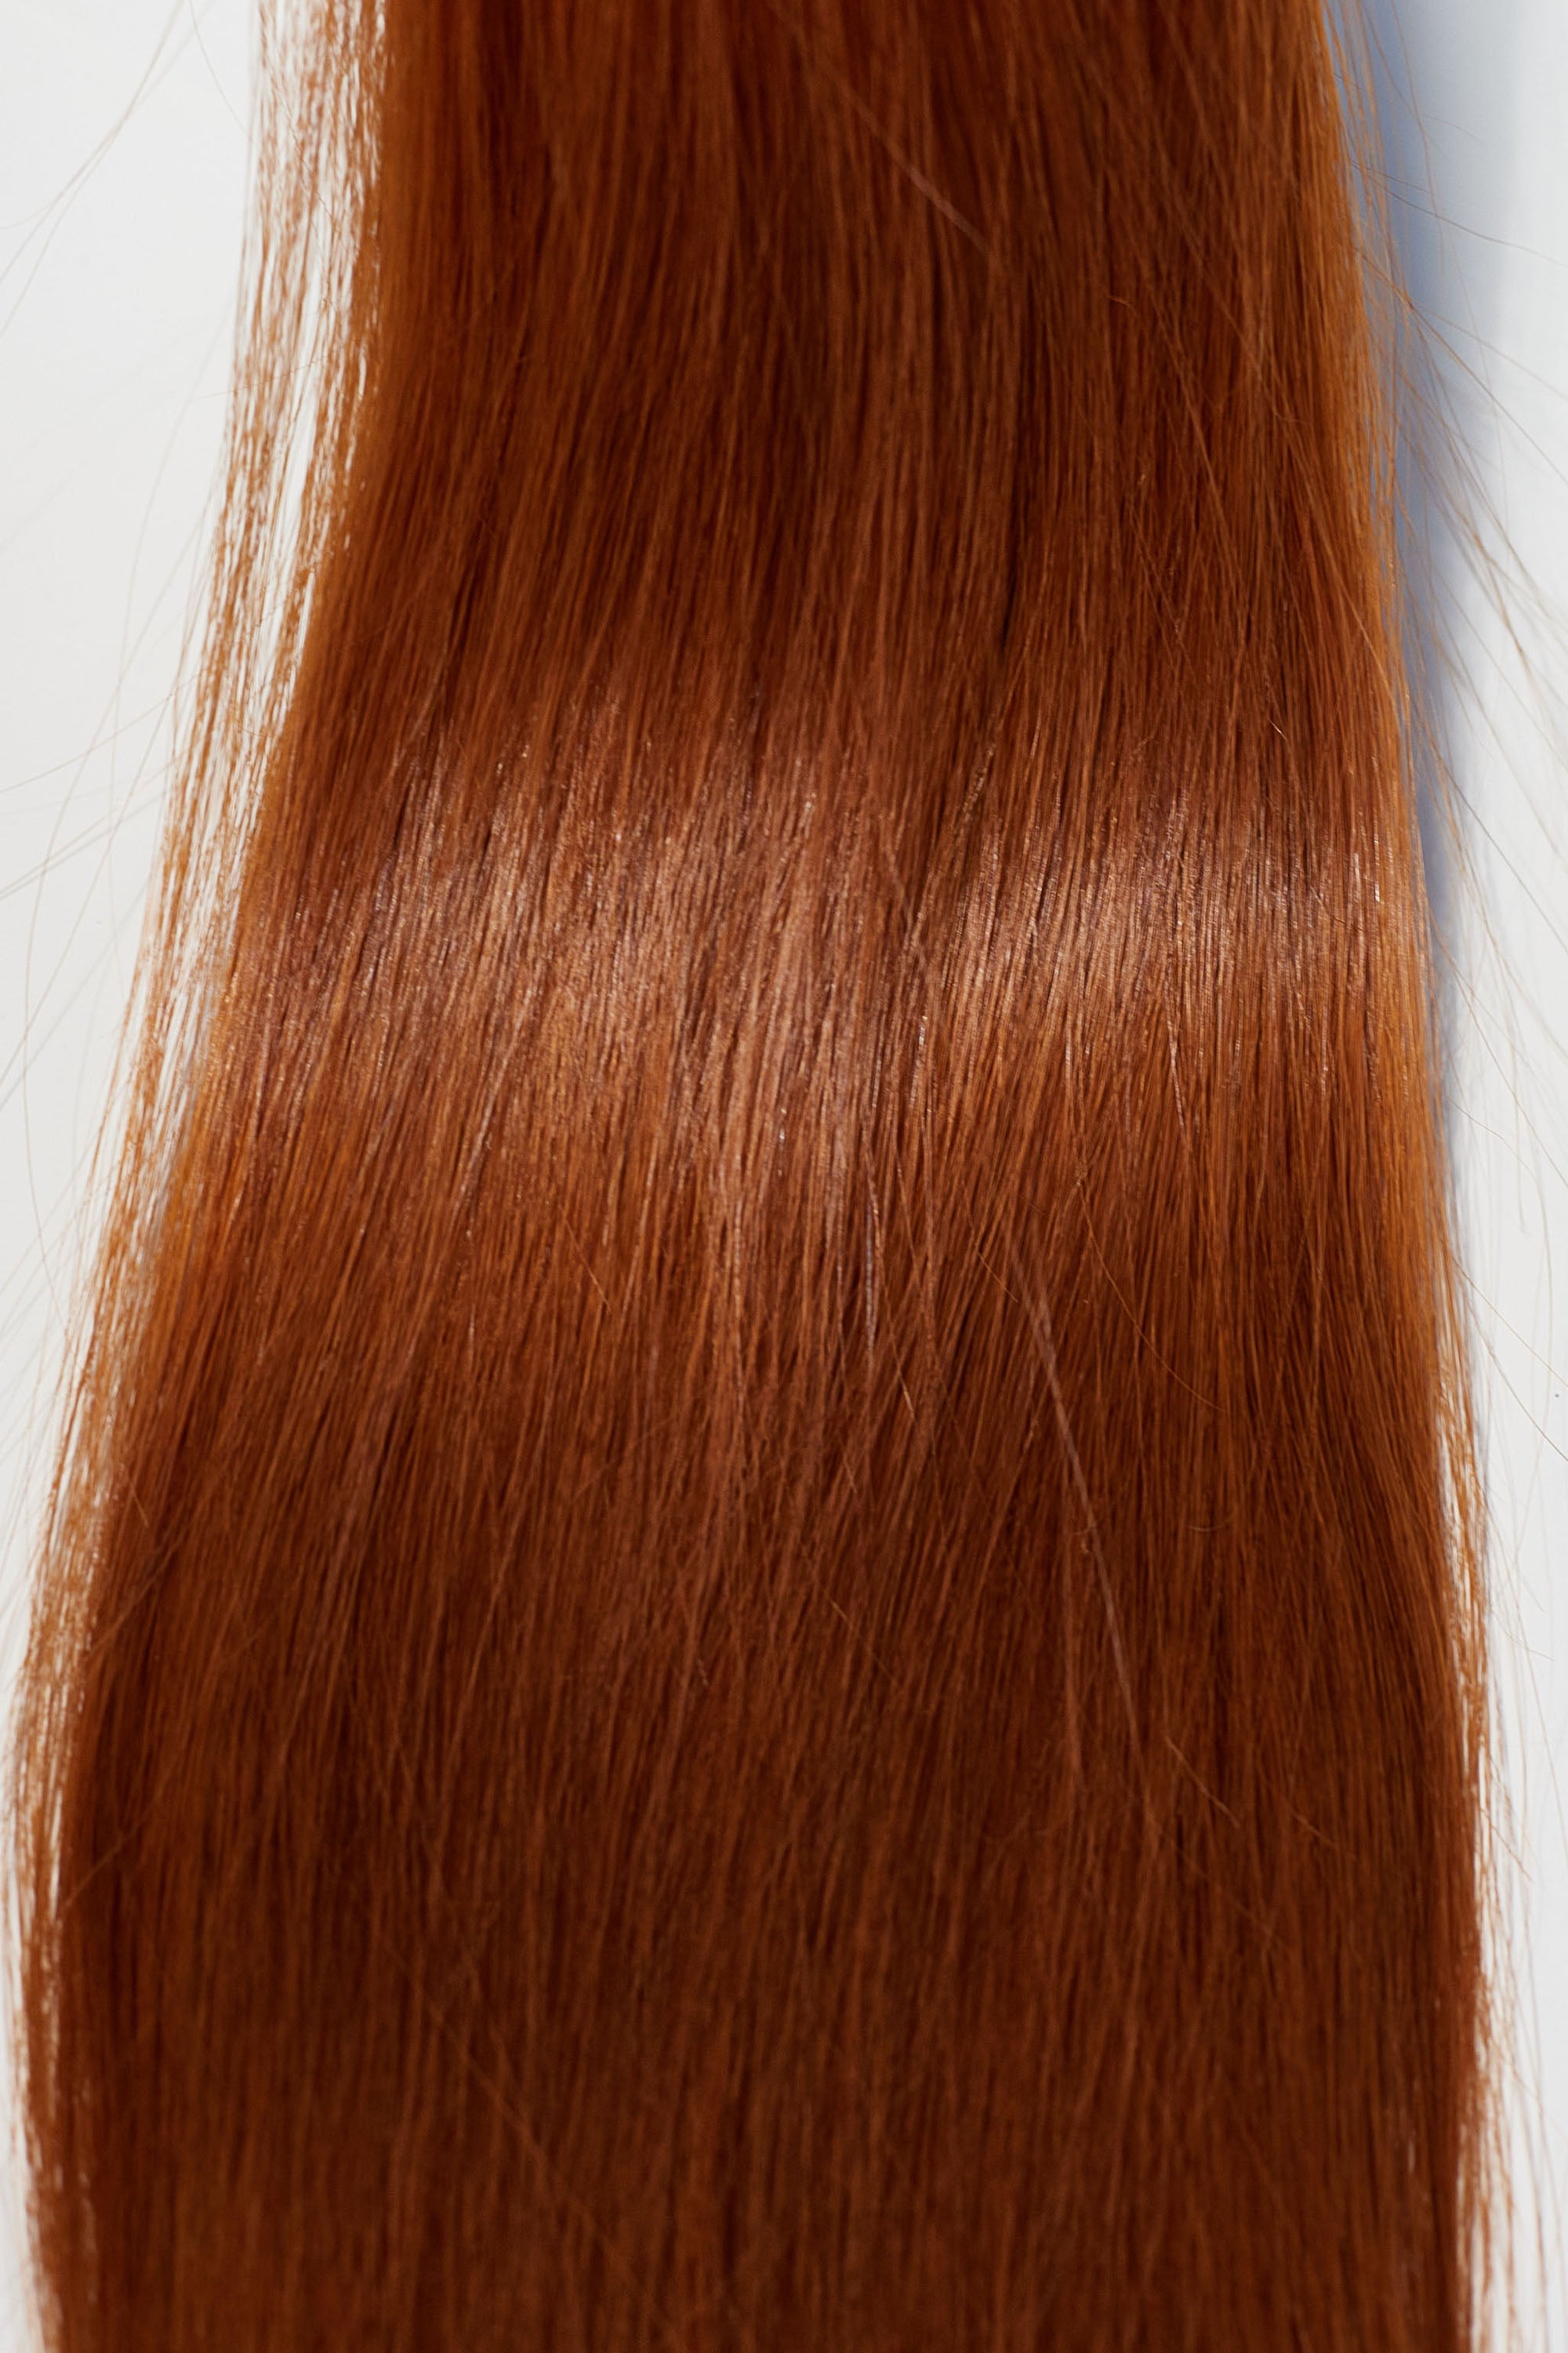 Behair professional Keratin Tip "Premium" 26" (65cm) Natural Straight Brilliant Copper #130 - 25g (Micro - 0.5g each pcs) hair extensions